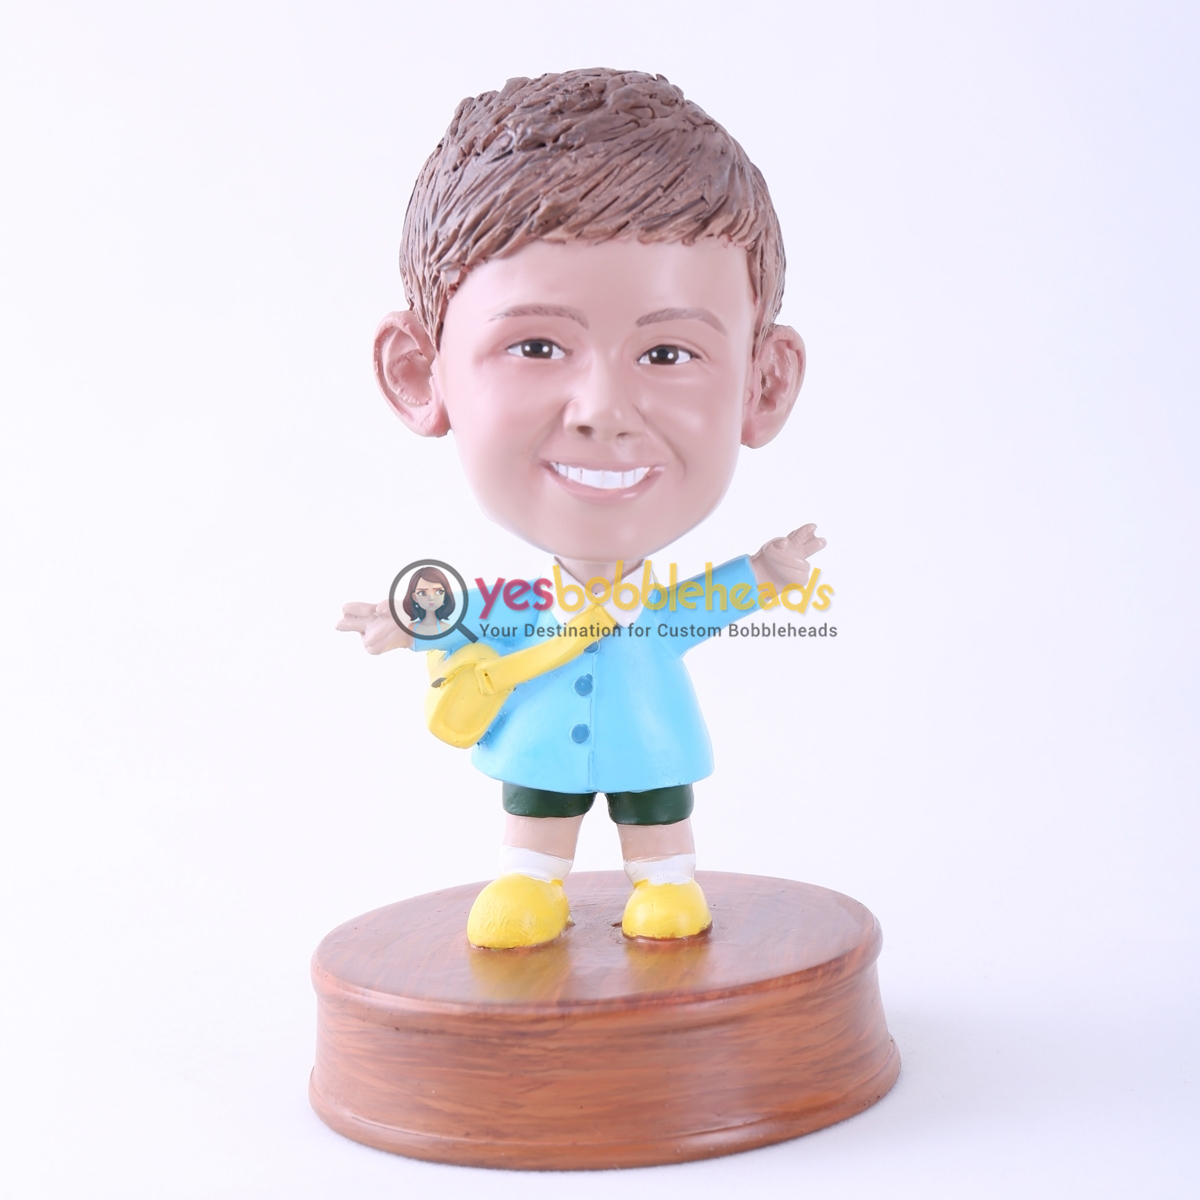 Picture of Custom Bobblehead Doll: Happy Little Boy